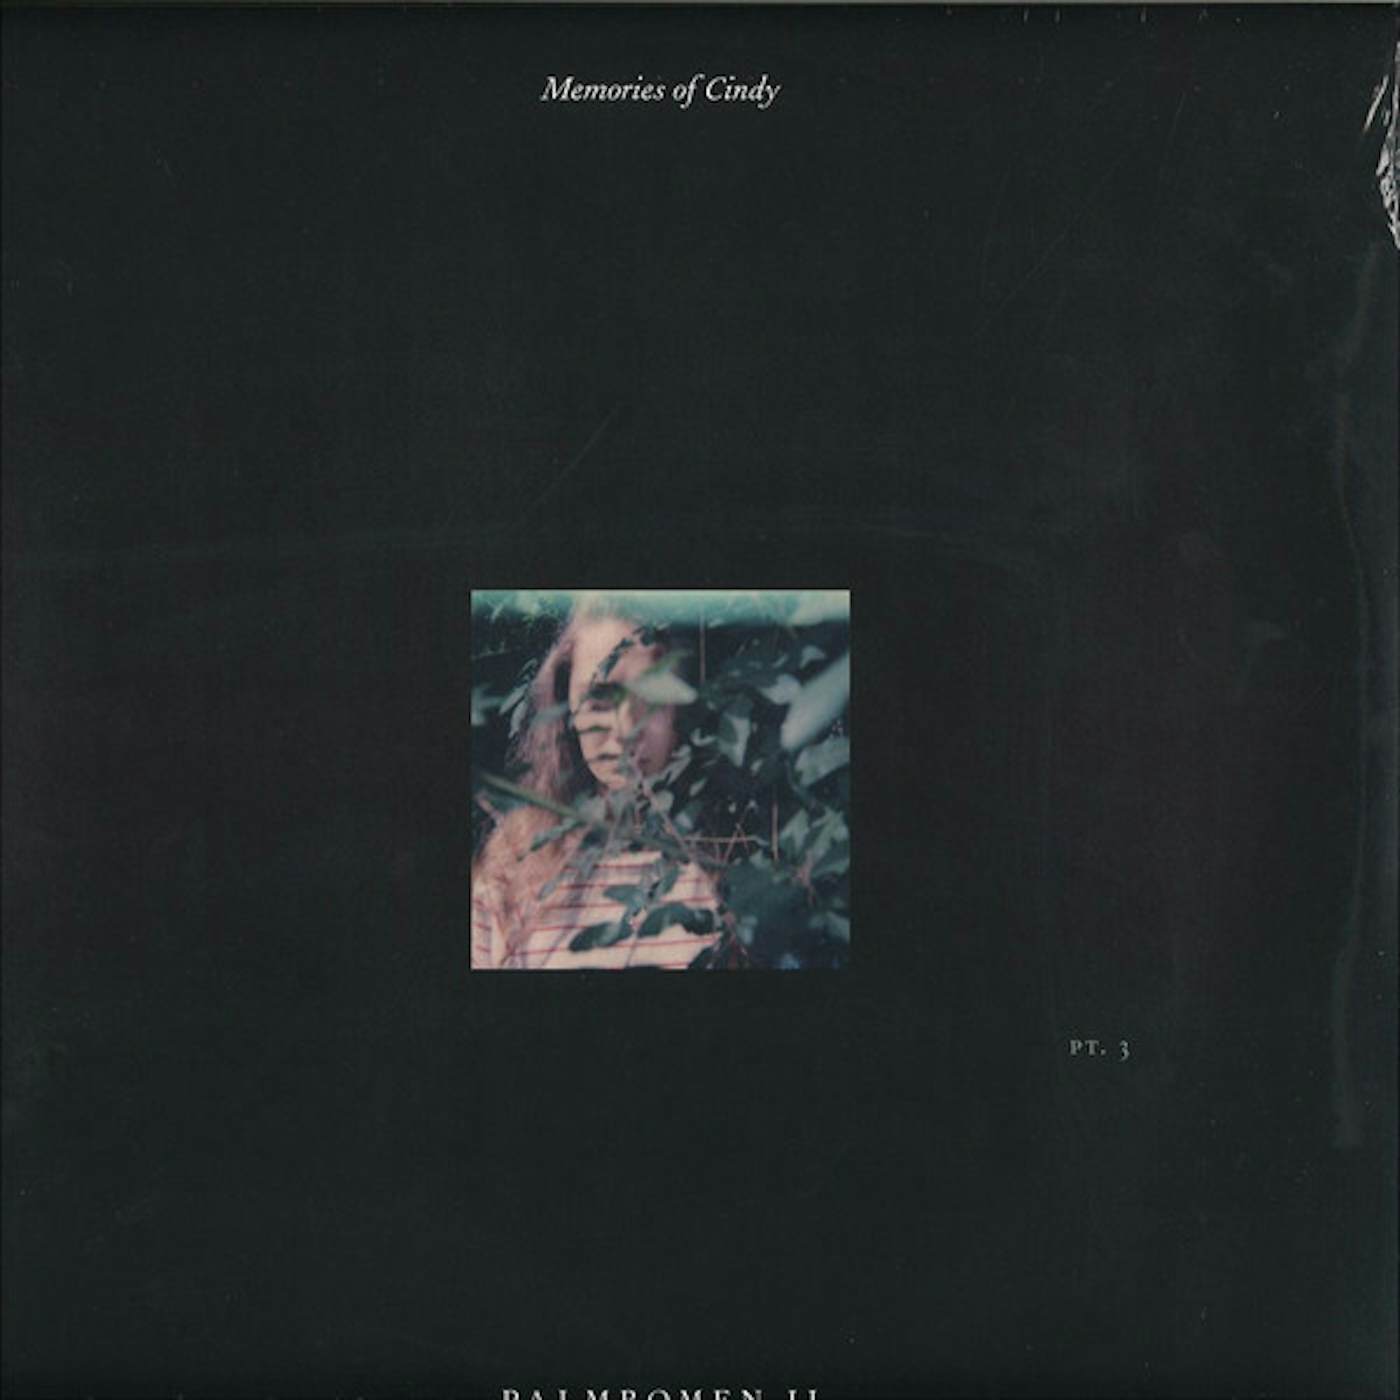 Palmbomen II MEMORIES OF CINDY PT. 3 Vinyl Record